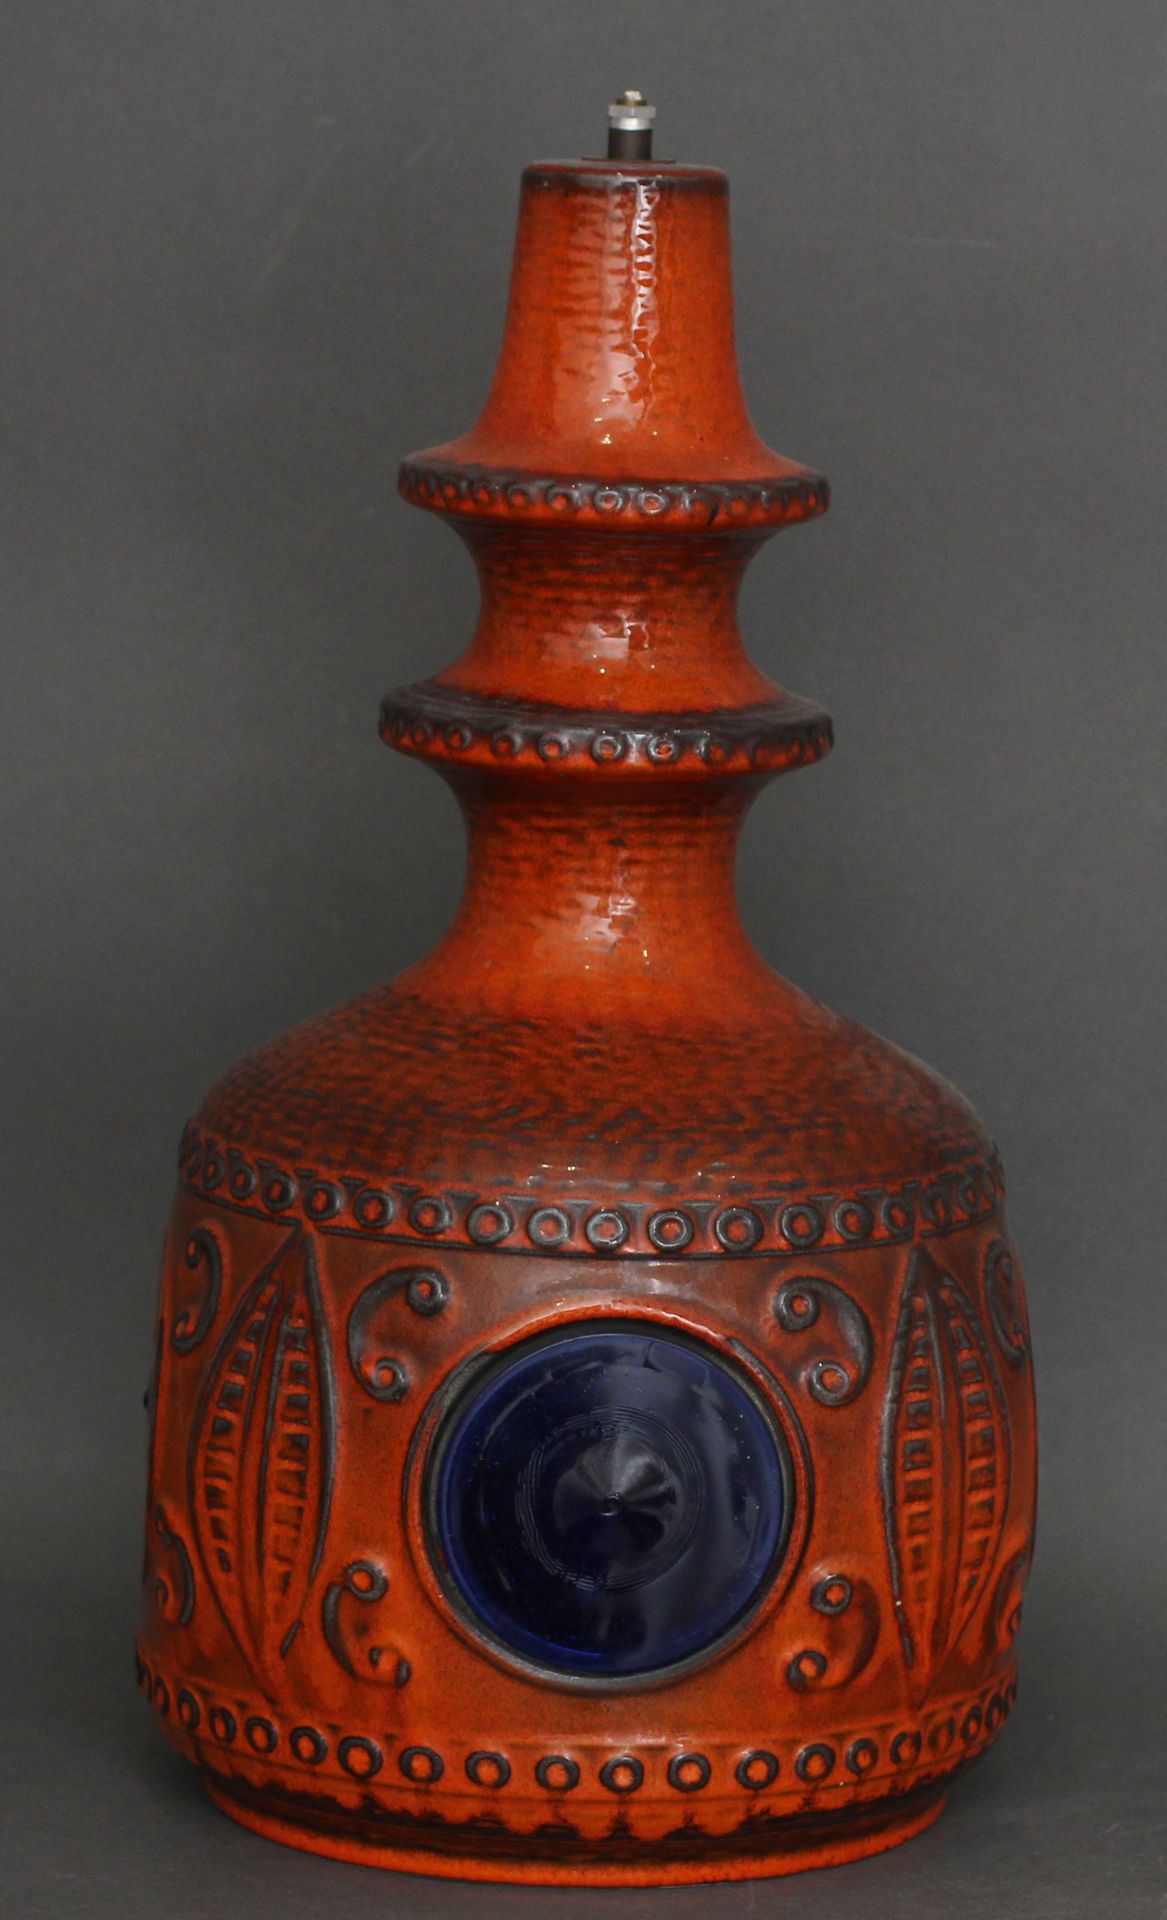 Null BAY Keramik

Ceramic lamp base with orange glaze and blue glass discs with &hellip;